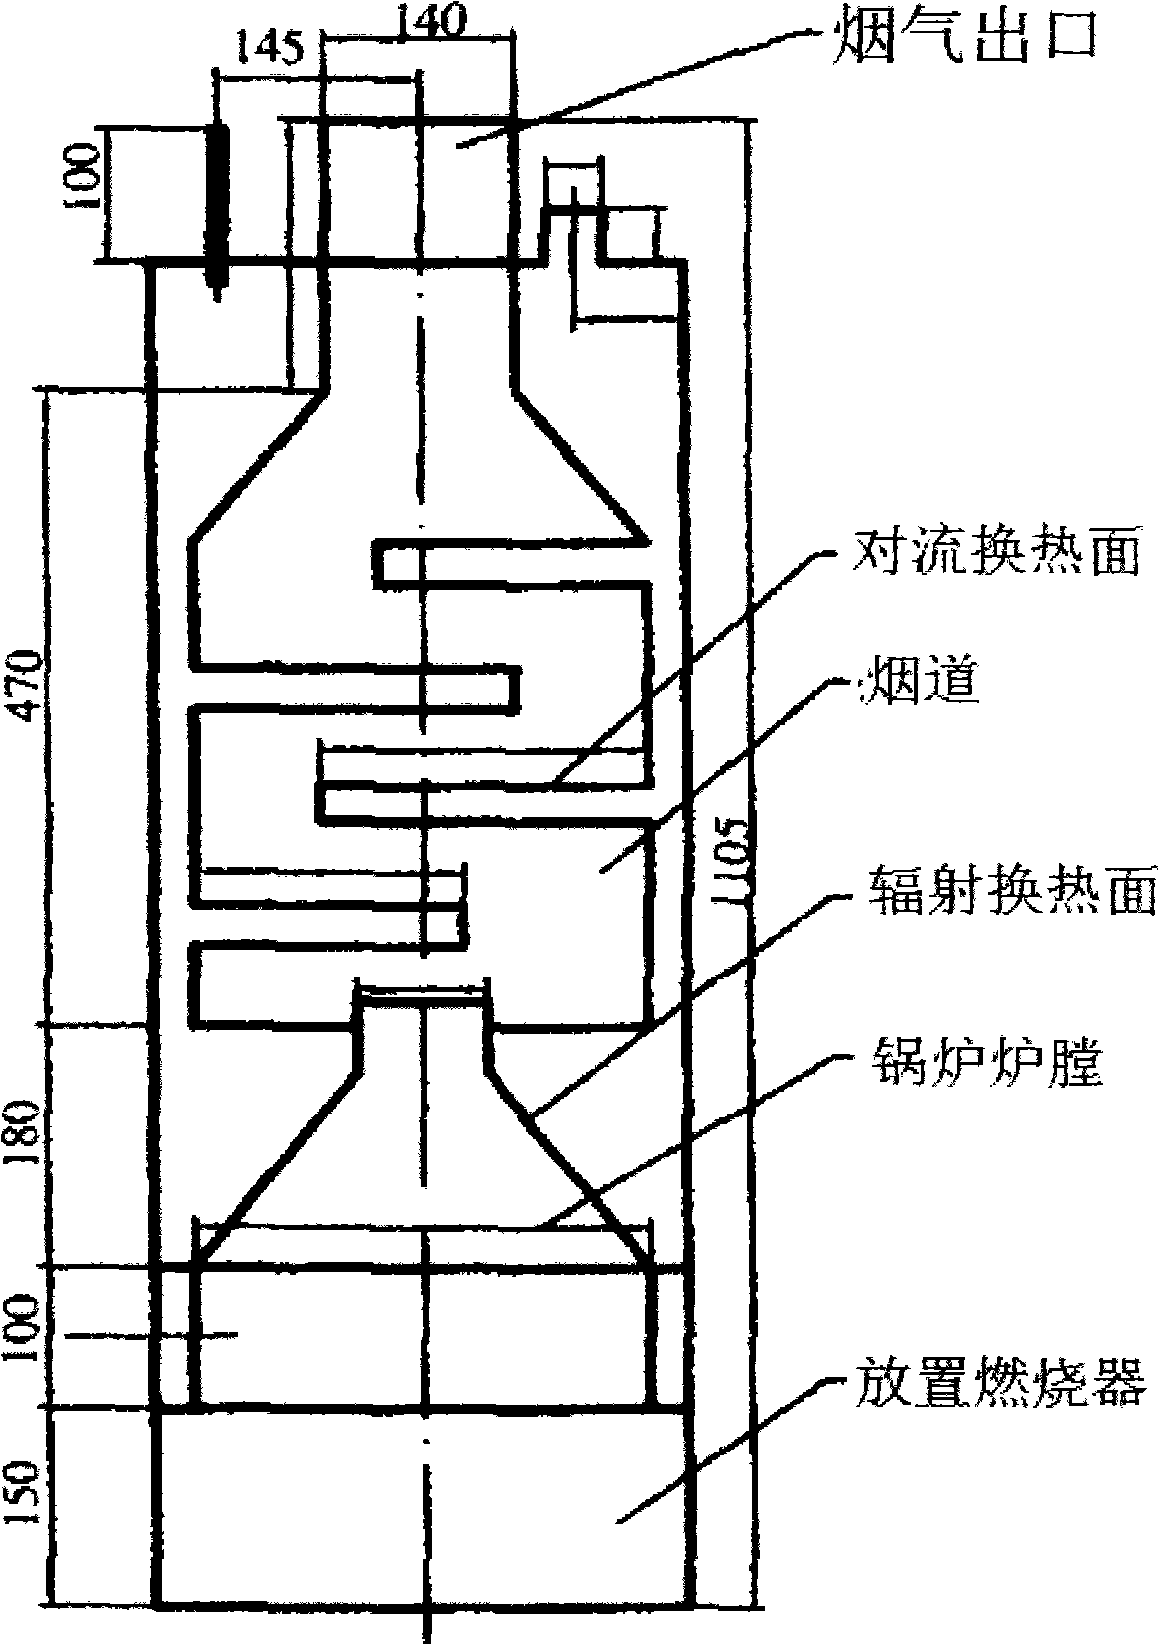 Method for designing straw gasification gas boiler